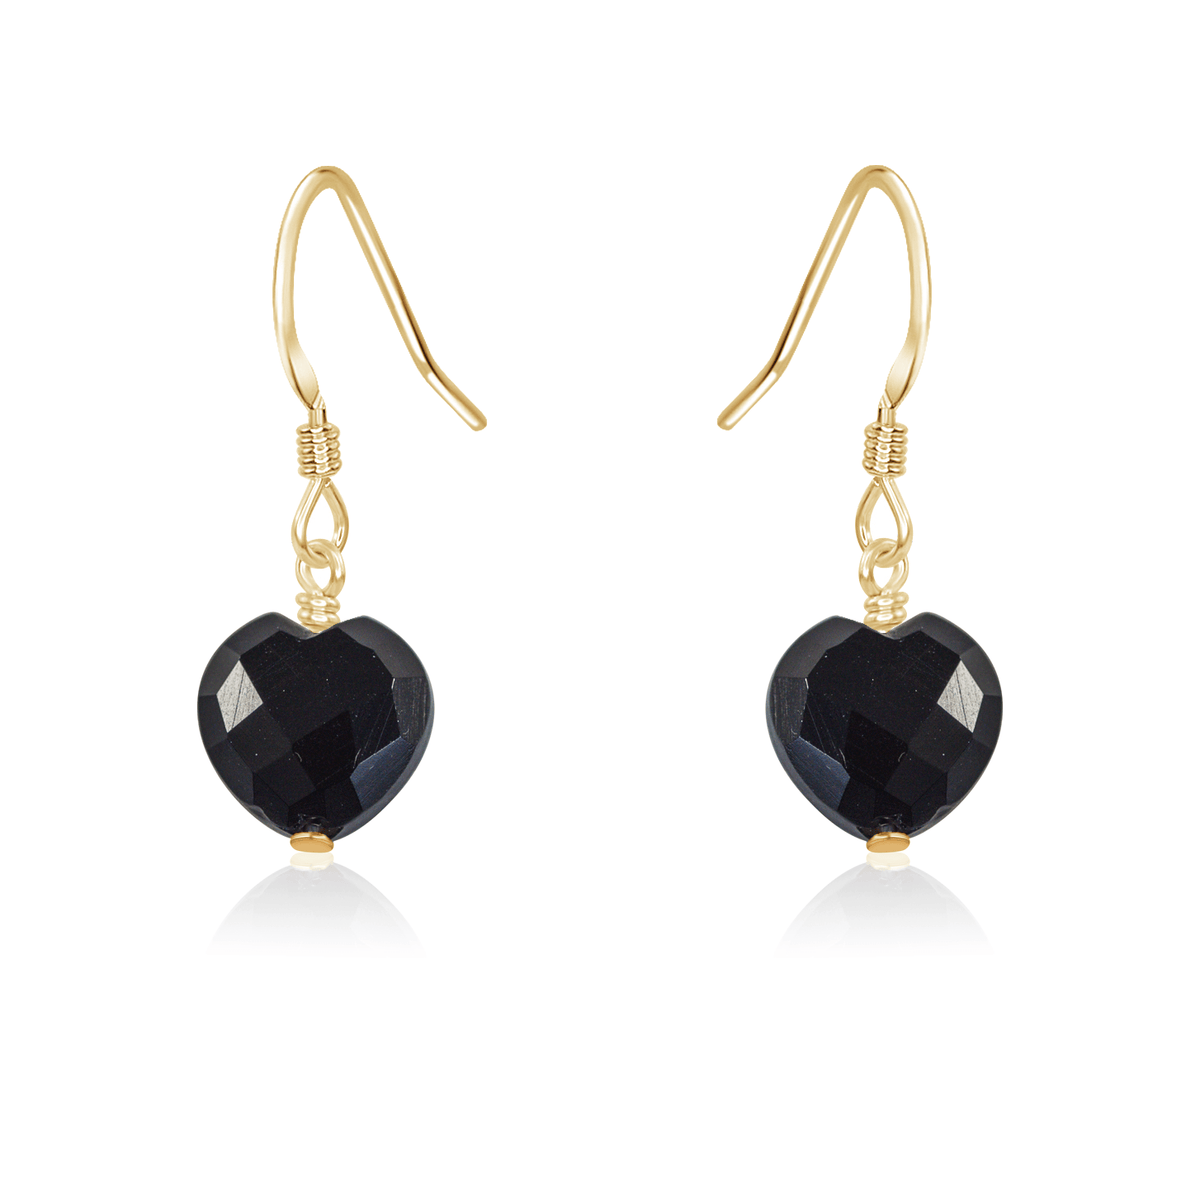 Black Onyx Crystal Heart Dangle Earrings - Black Onyx Crystal Heart Dangle Earrings - 14k Gold Fill - Luna Tide Handmade Crystal Jewellery